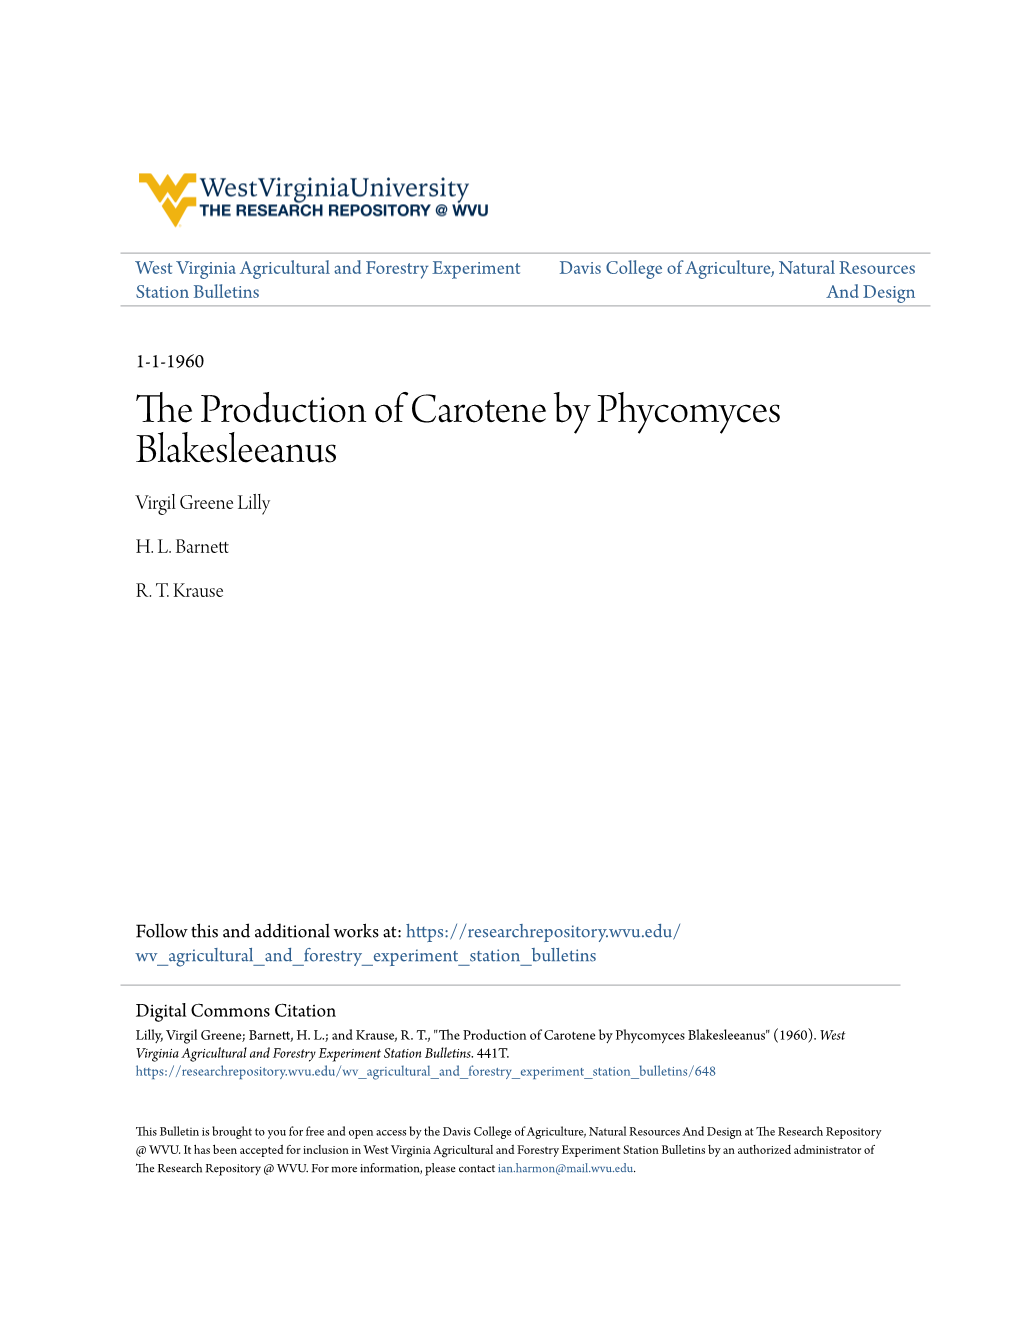 The Production of Carotene by Phycomyces Blakesleeanus